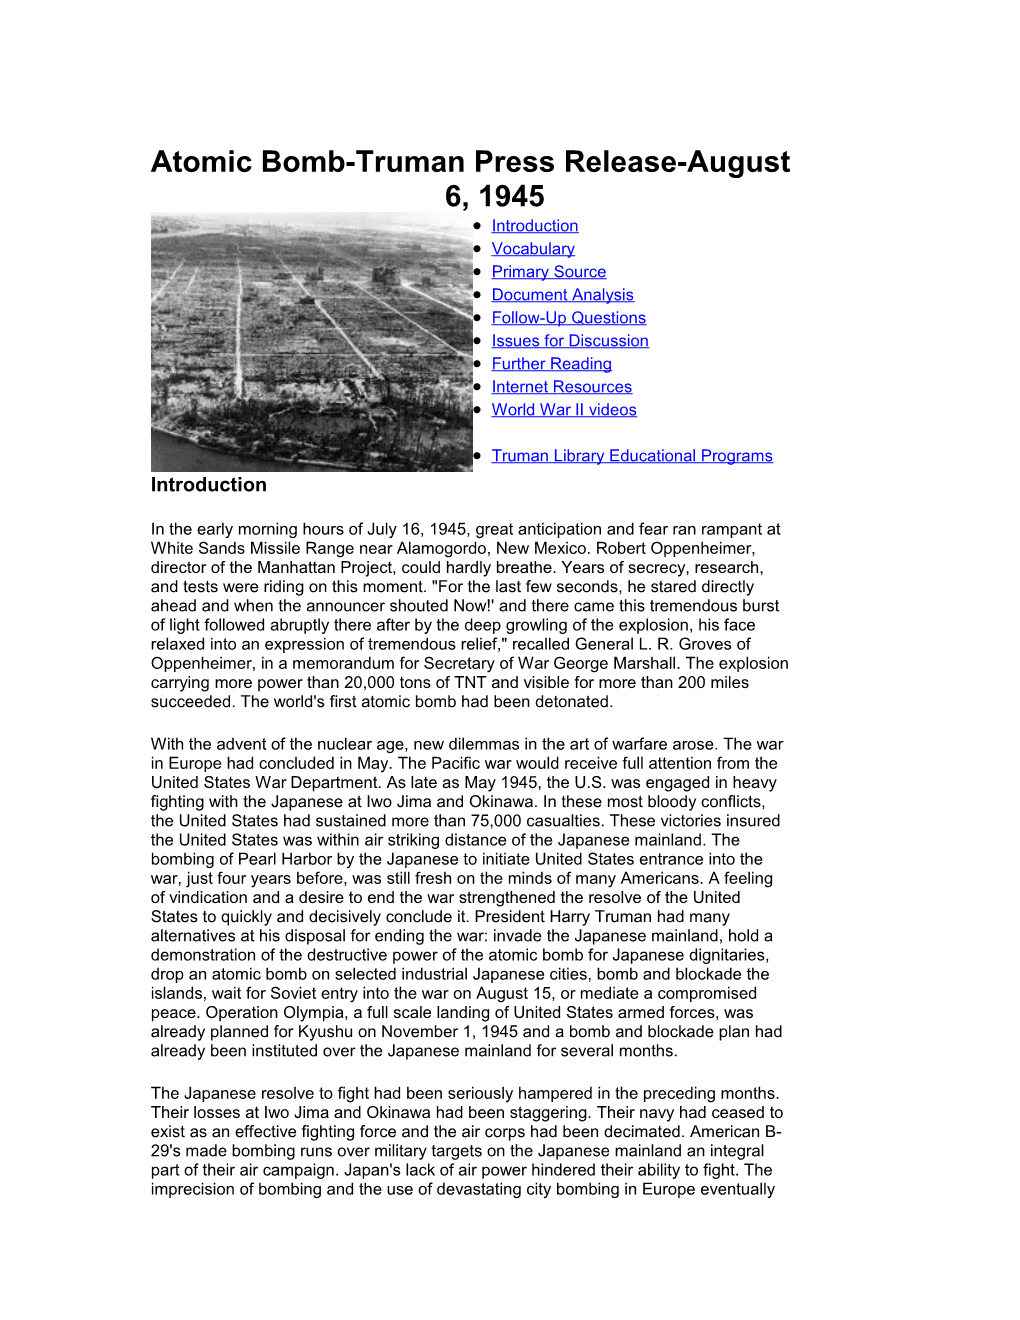 Atomic Bomb-Truman Press Release-August 6, 1945